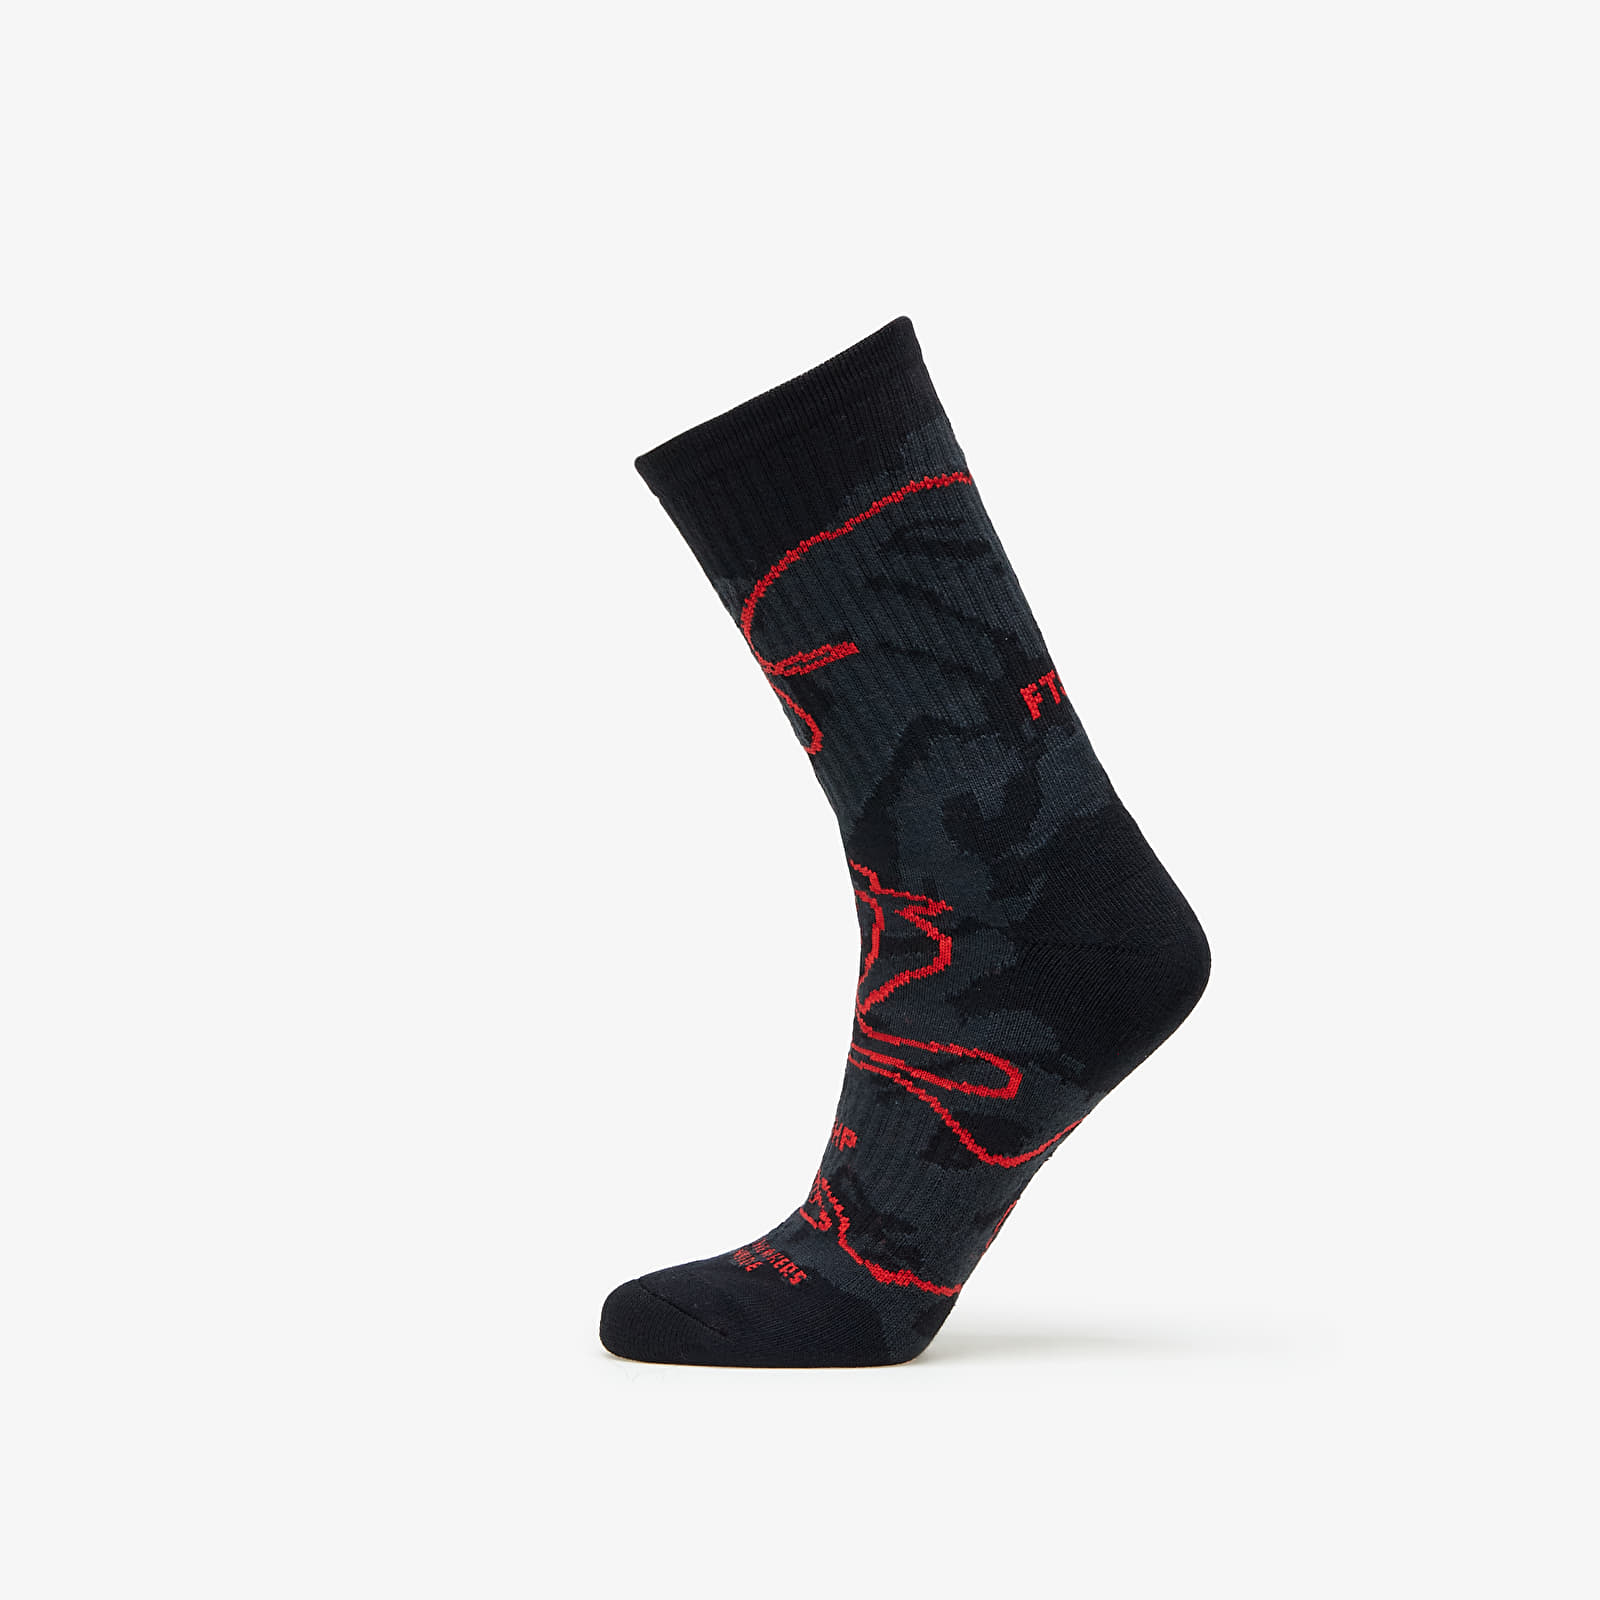 Ponožky Footshop The More Basketball Socks Black/ Red